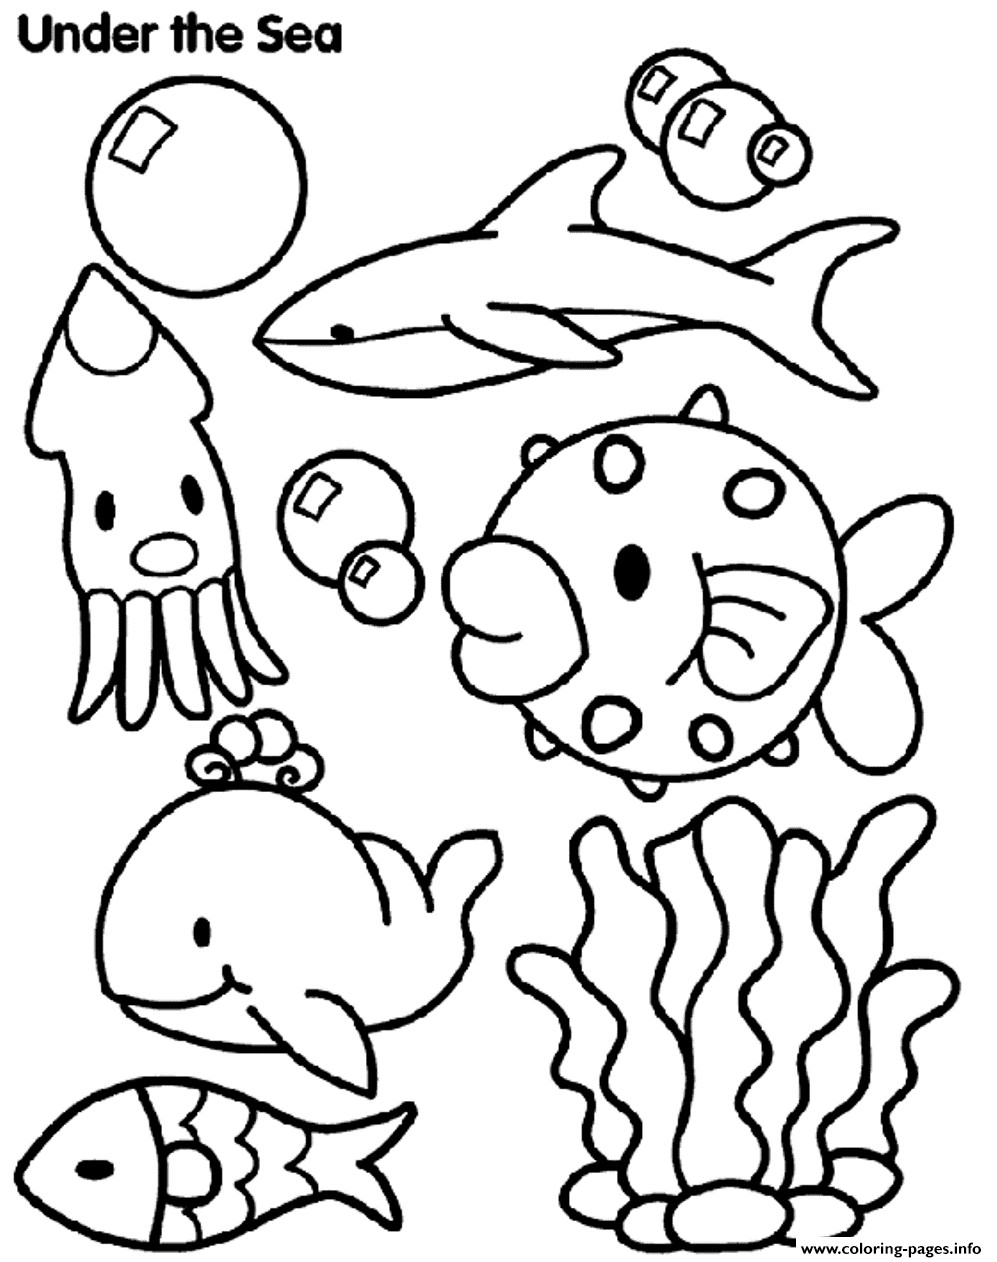 Under The Sea S Of Sea Animalsdf8a coloring